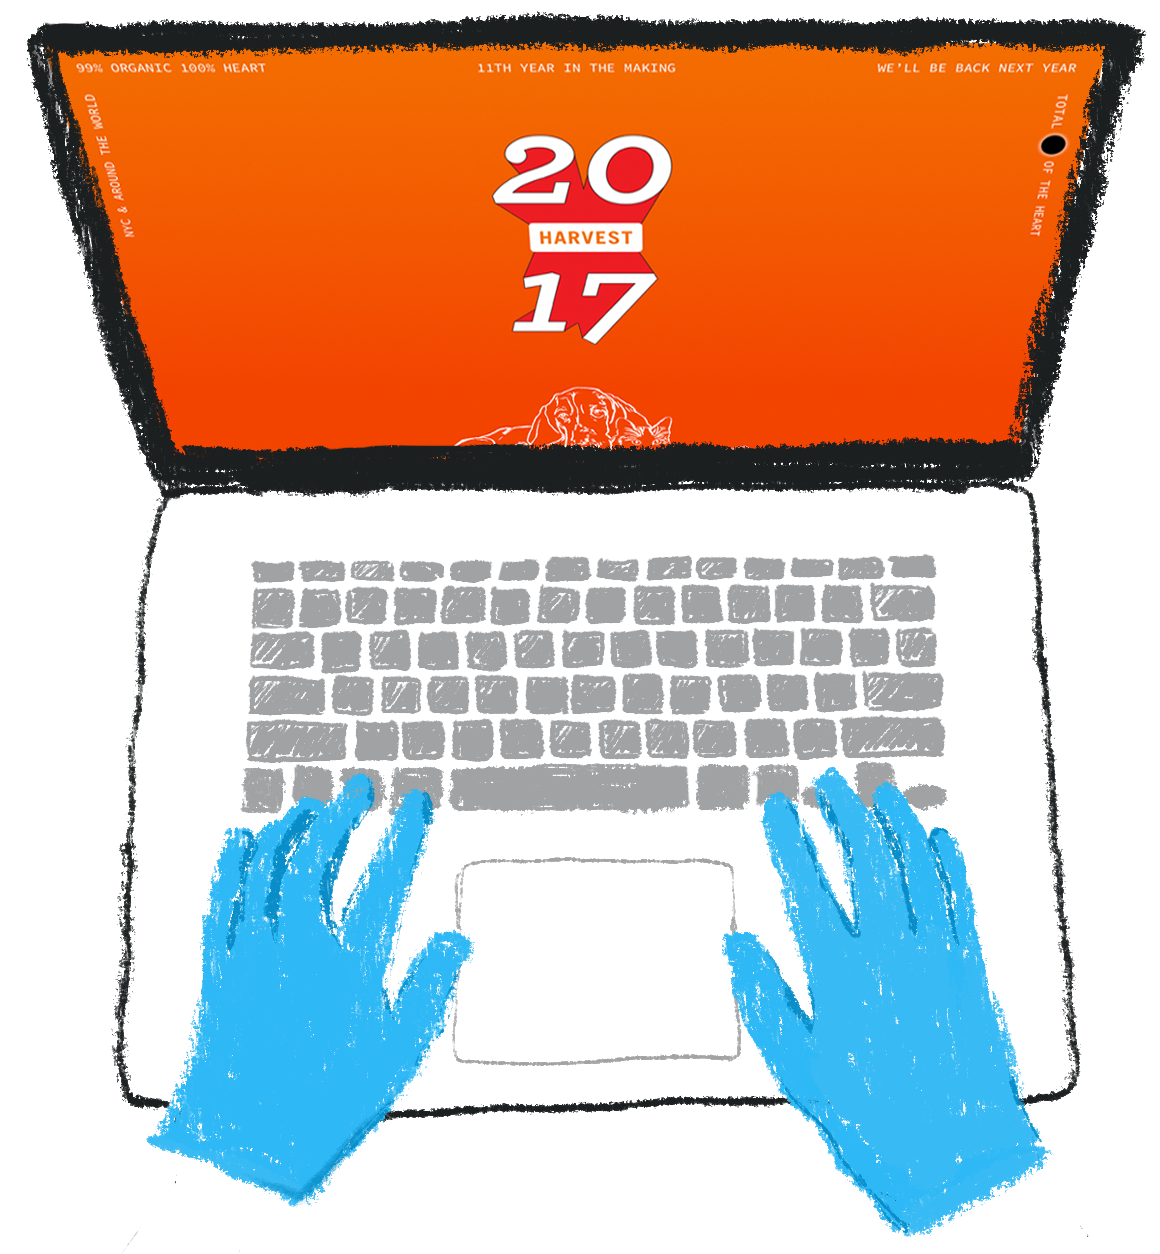 2017 Year In Review - Macbook Pro Keyboard Dvorak Eu (1160x1254)